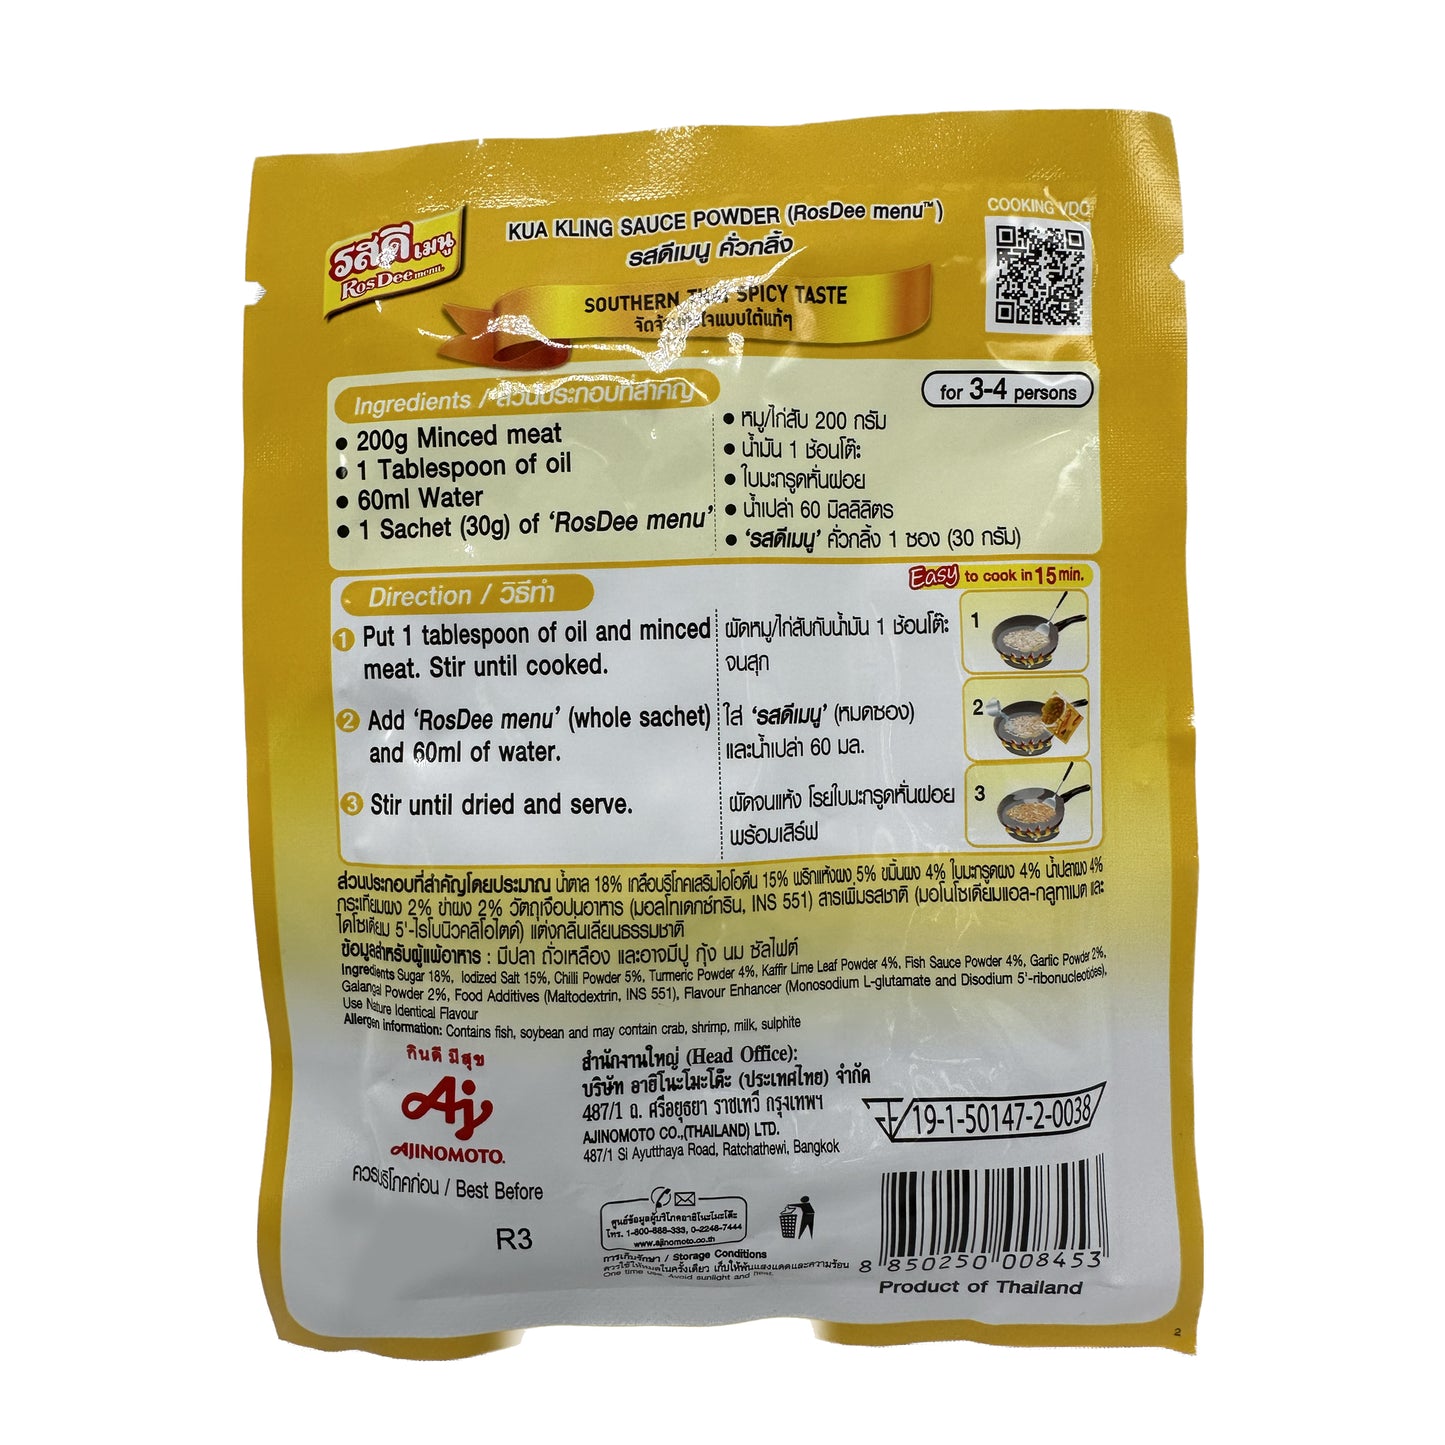 RosDee Menu Kua Kling Sauce Powder Hot Stir Fried Curry คั่วกลิ้งตรารสดี - 30g